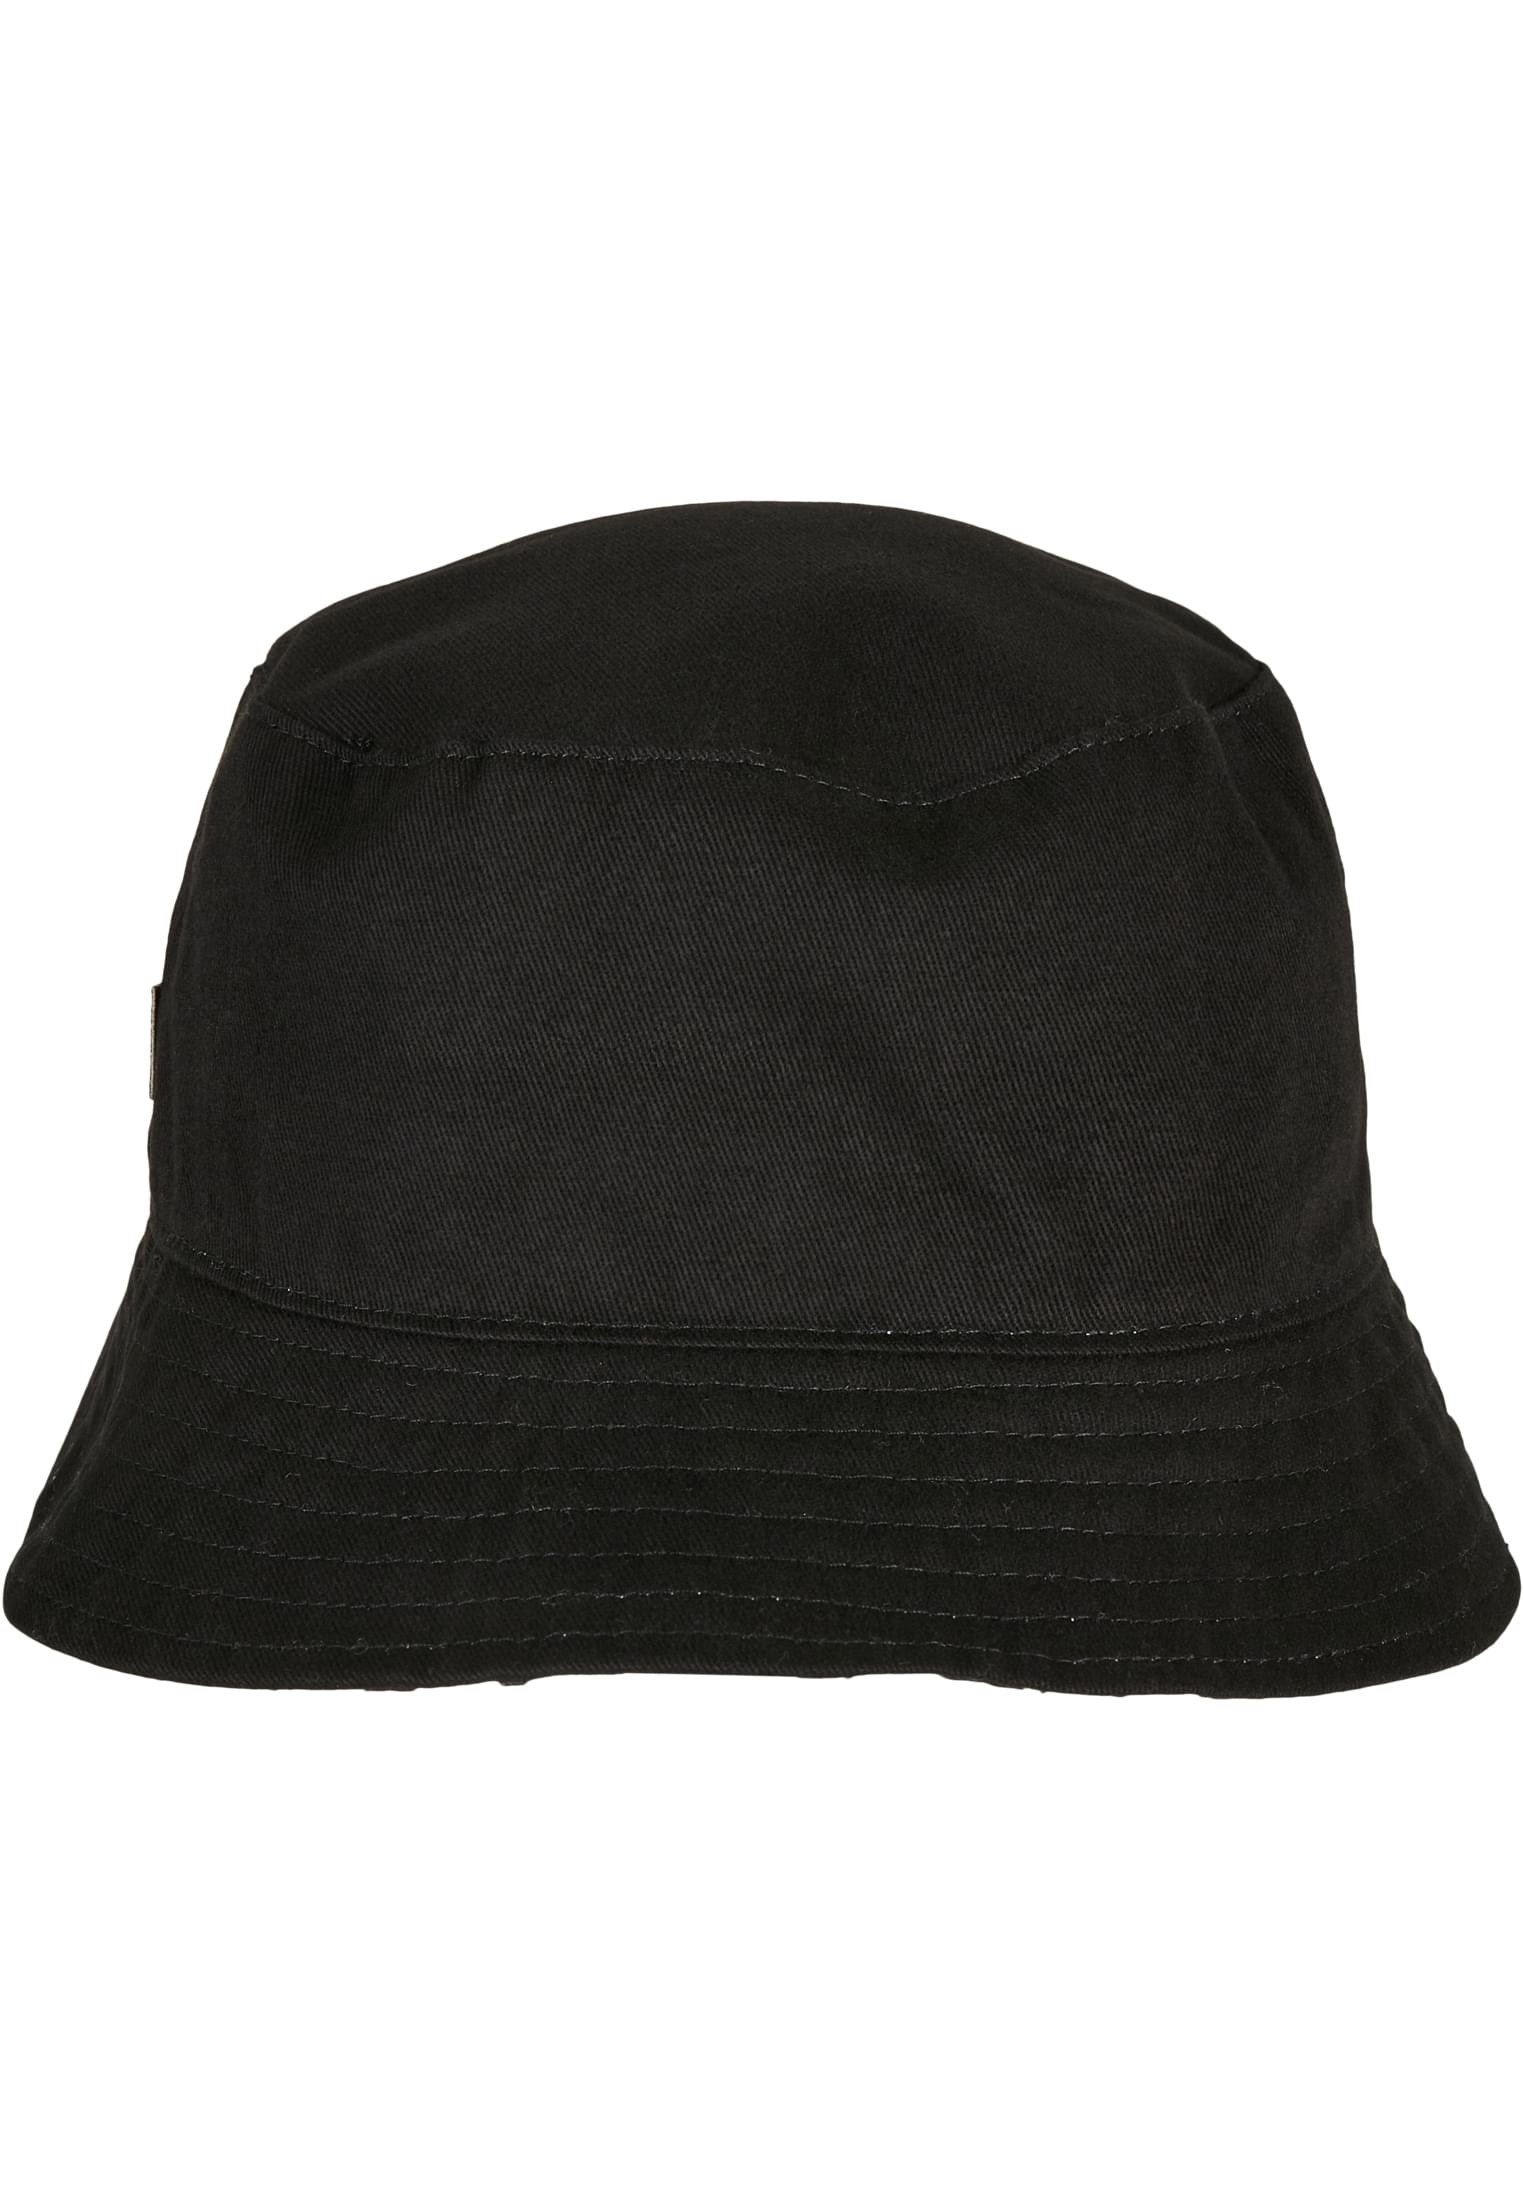 Accessoires Reversible Flex Dreamin Day Cap & CAYLER Hat Bucket SONS